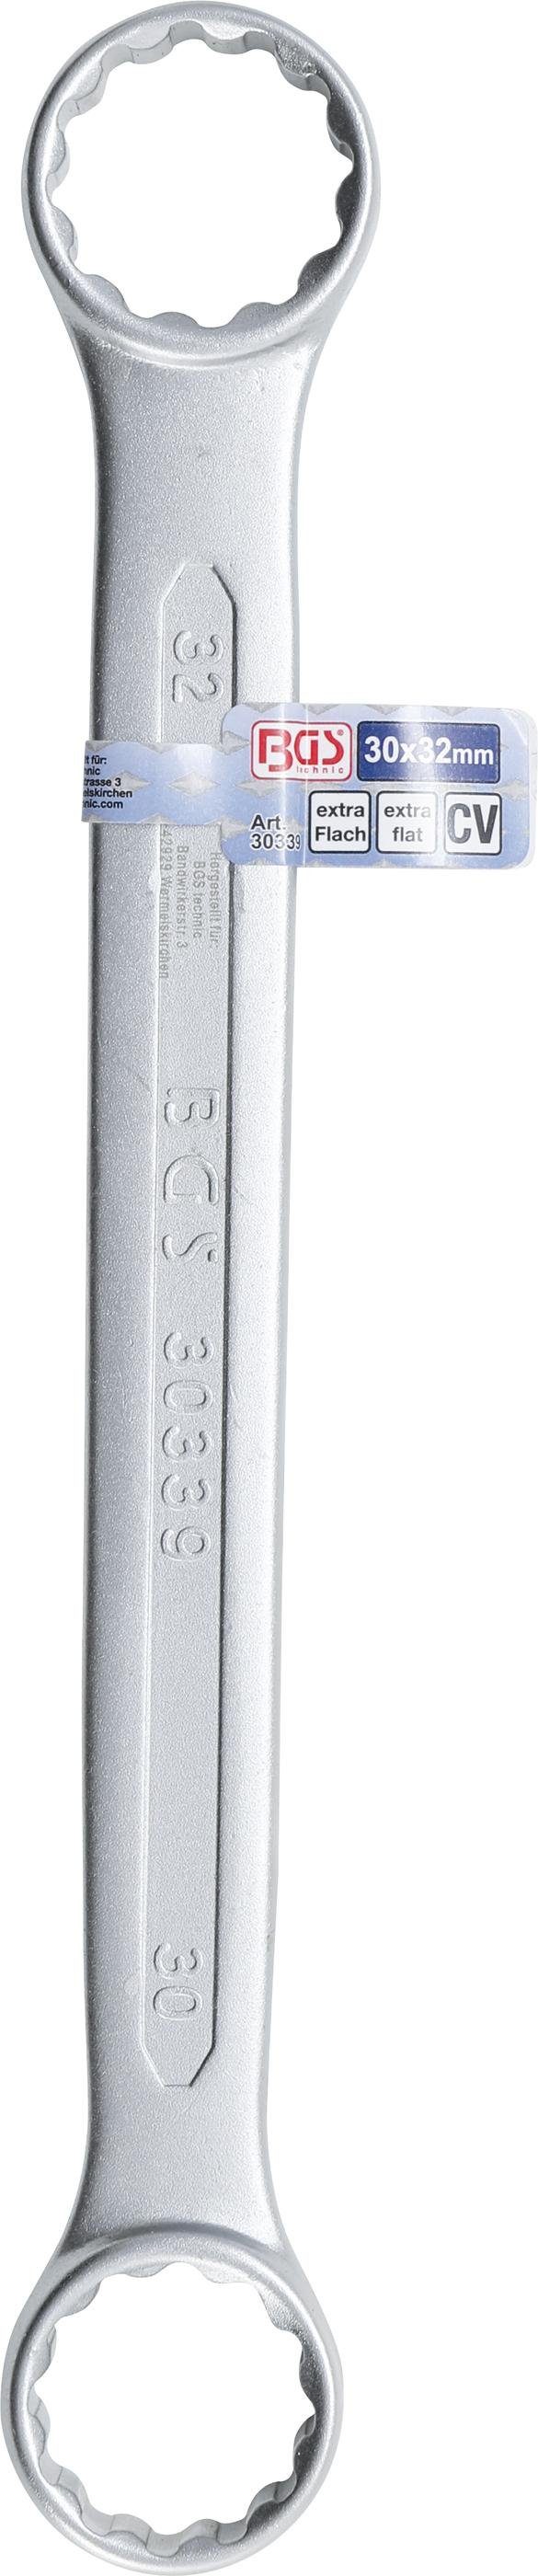 Doppel-Ringschlüssel, extra technic 30 SW mm x 32 BGS flach, Ringschlüssel